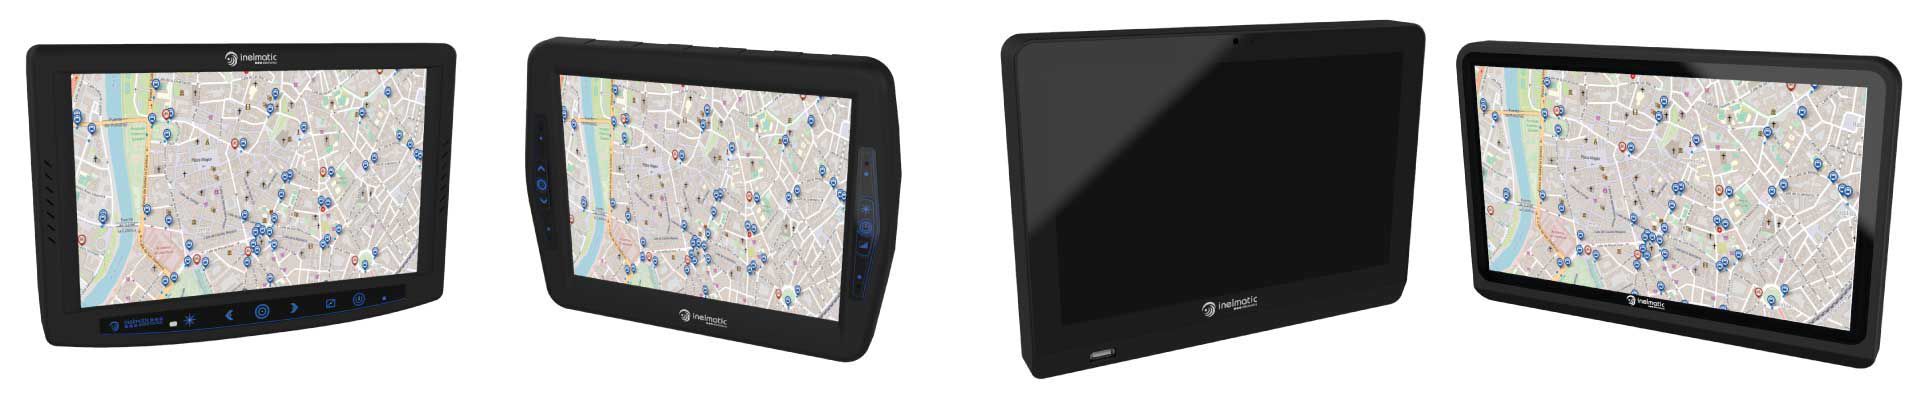 XF-Serie robuster Bildschirm für den Fahrzeugtransport, transflektiver optischer Klebebildschirm - Inelmatic